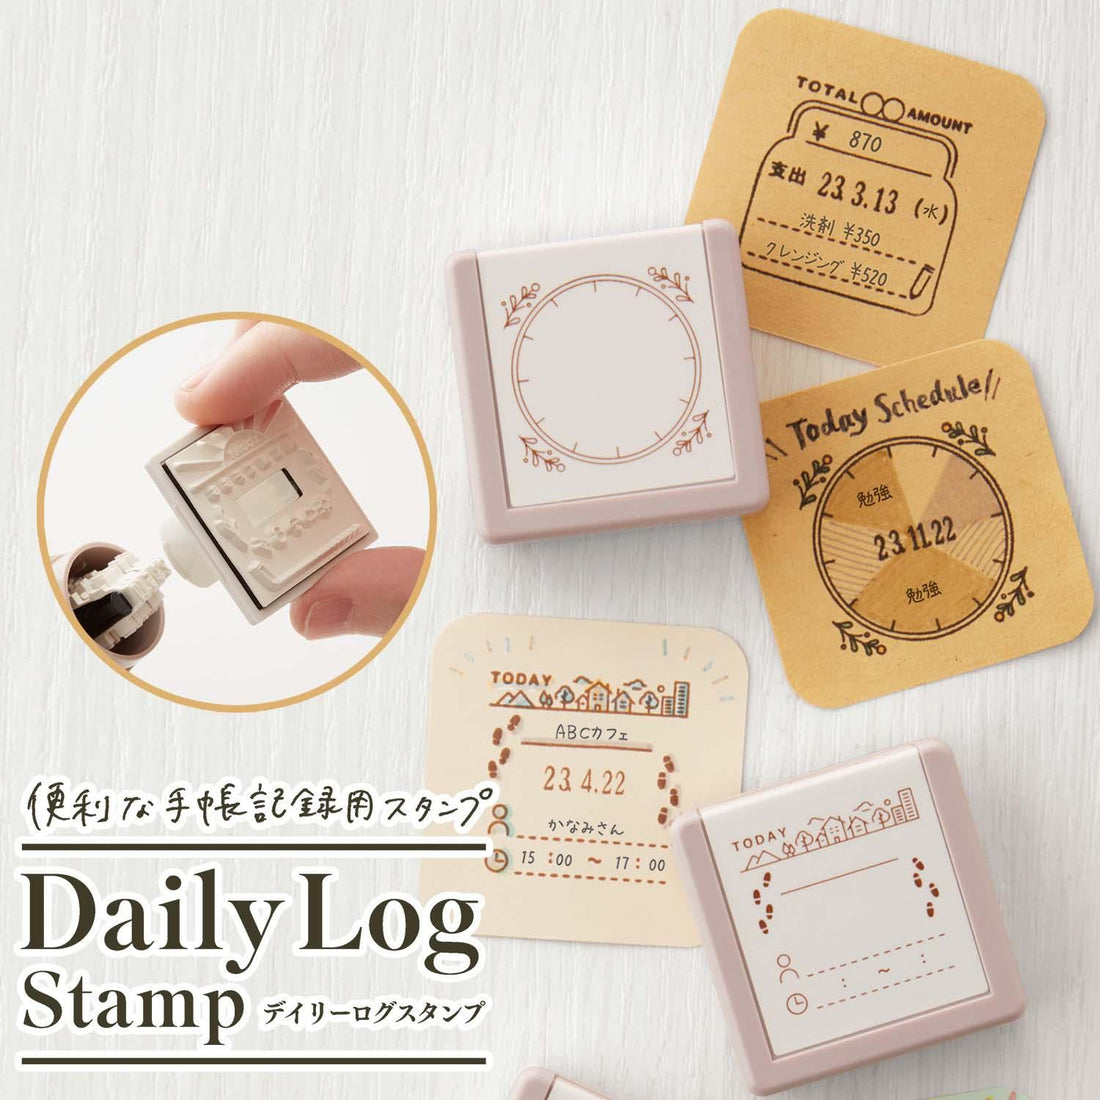 Daily Log Stamp - Today Menu - Techo Treats